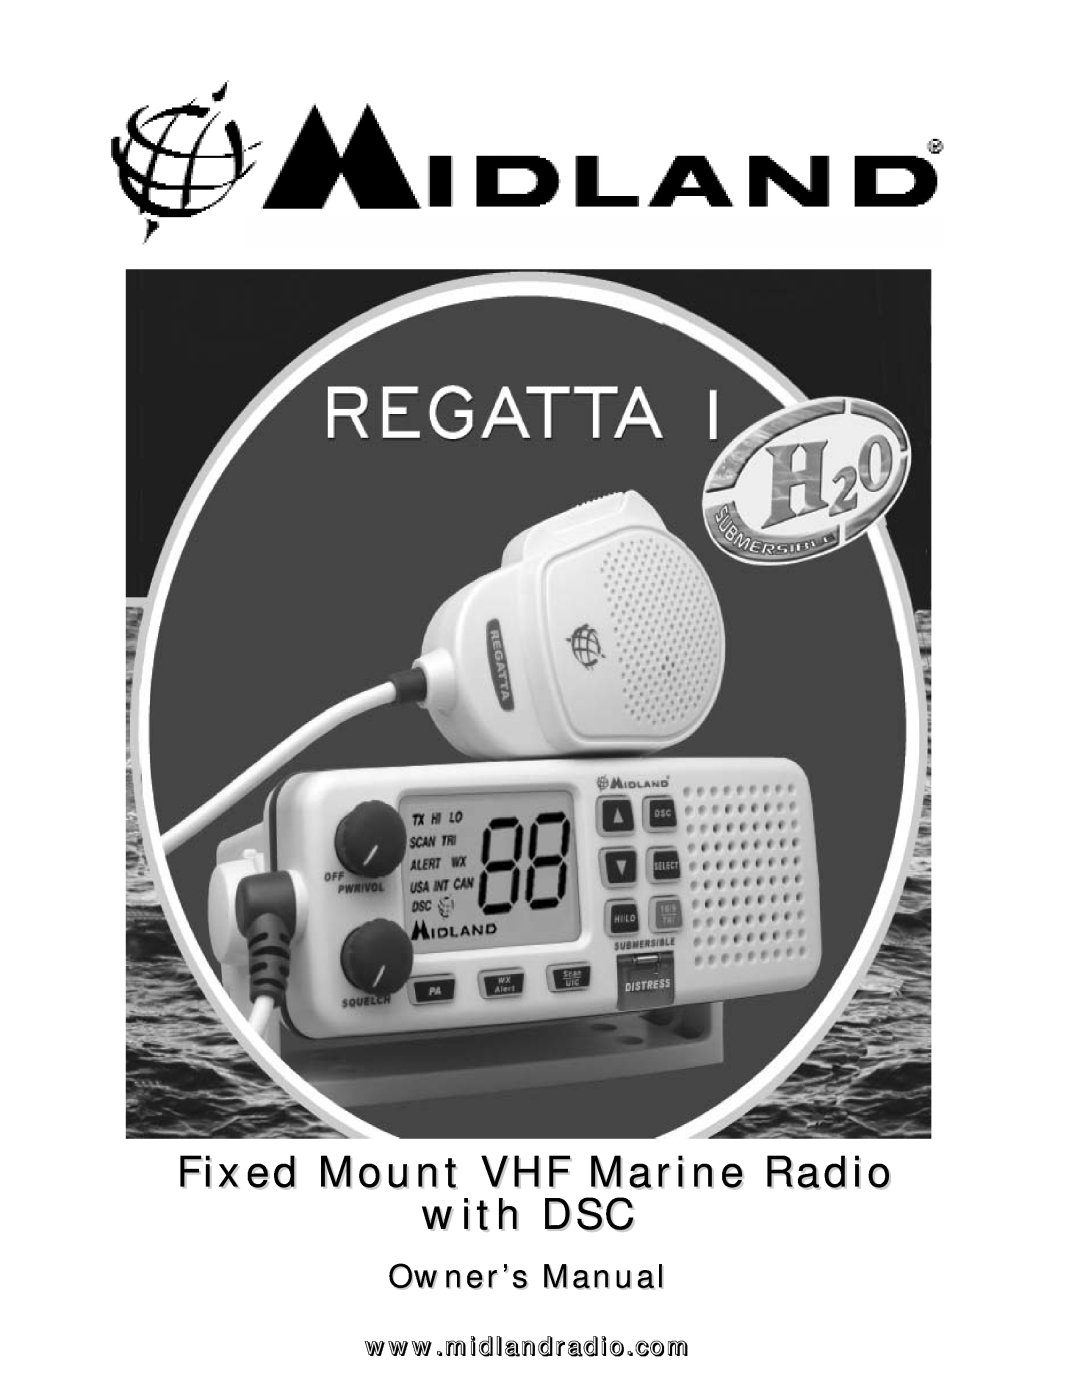 Midland Radio Regatta 1 owner manual Fixed Mount VHF Marine Radio with DSC 